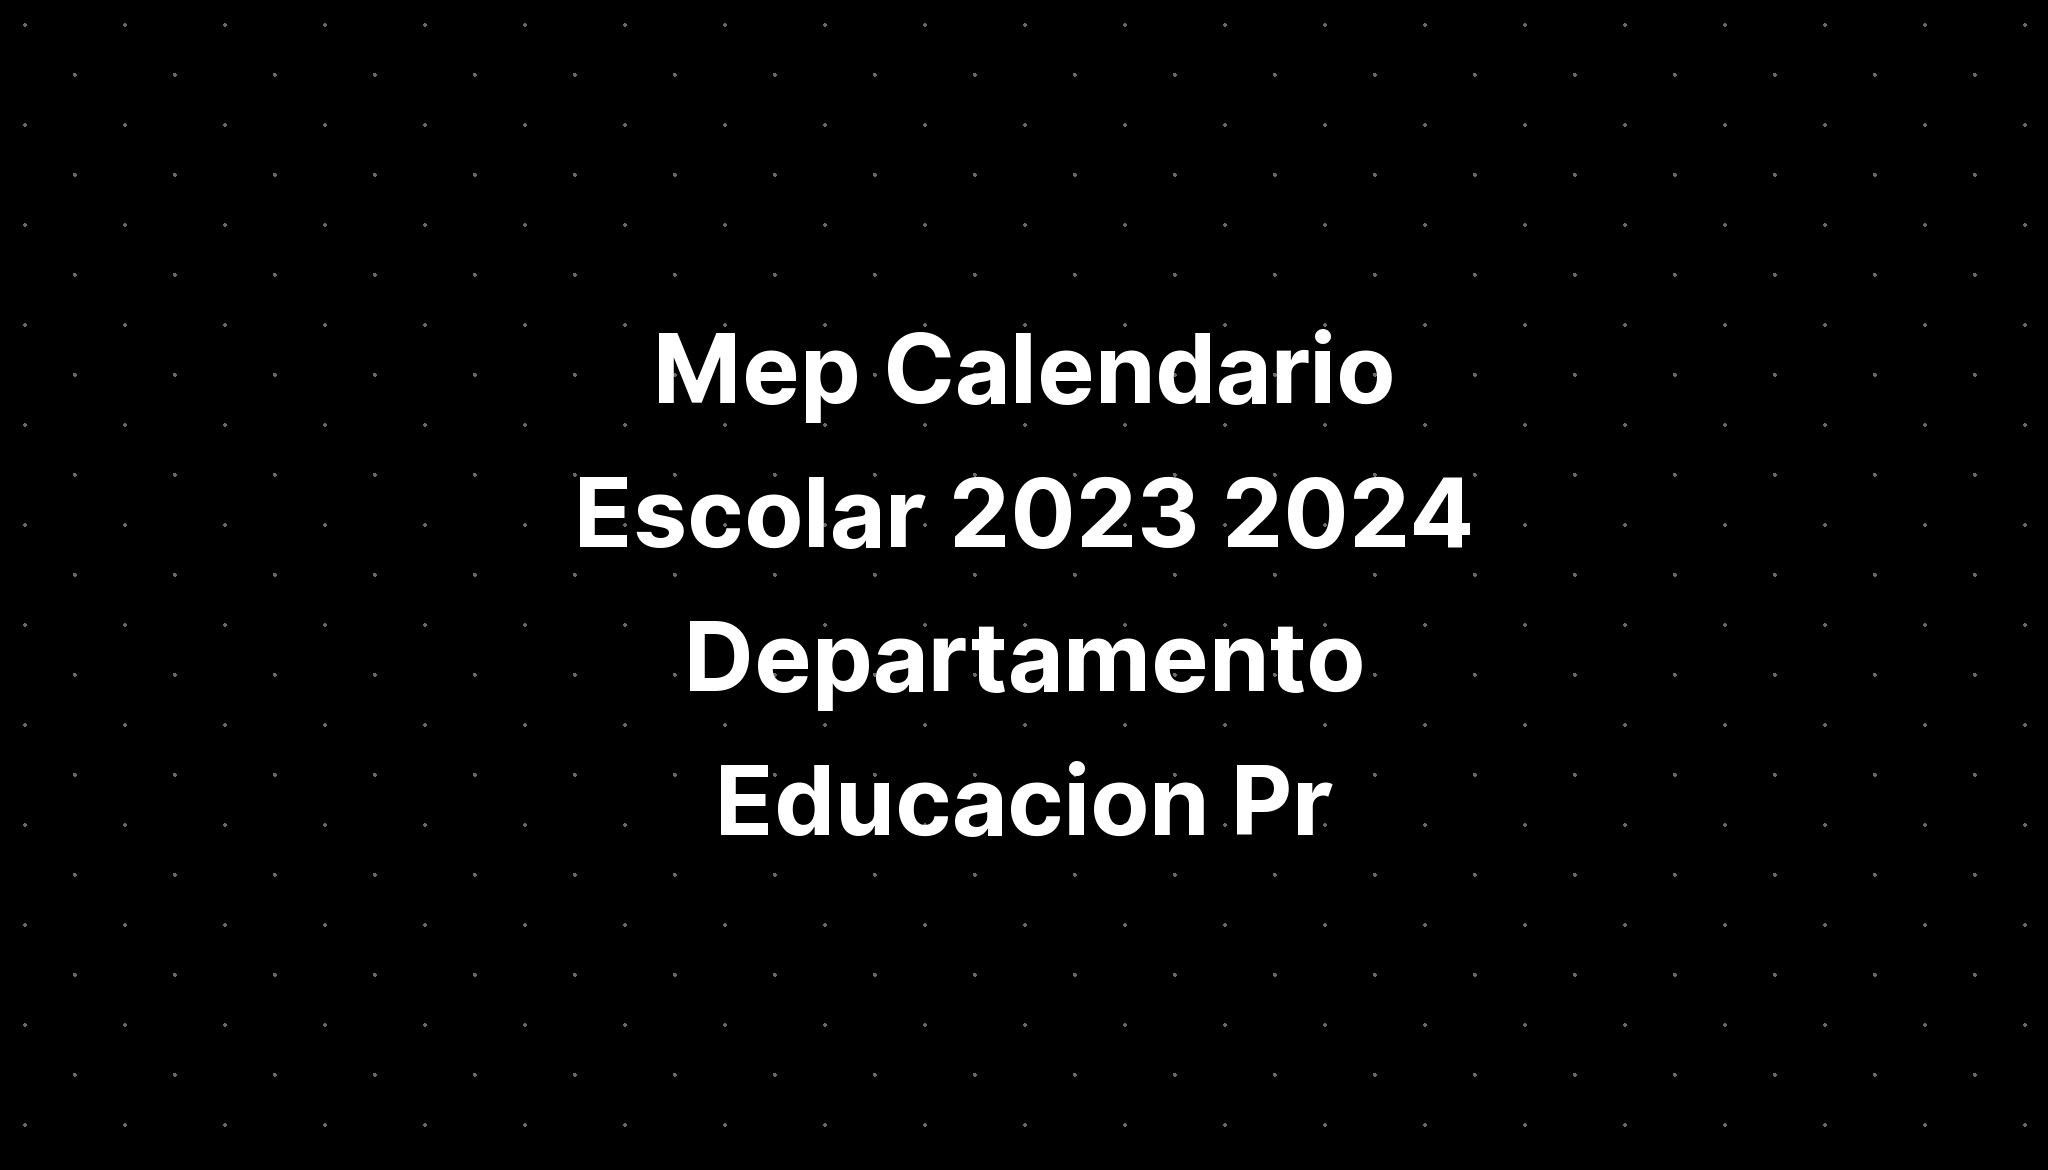 Mep Calendario Escolar 2023 2024 Departamento Educacion Pr IMAGESEE